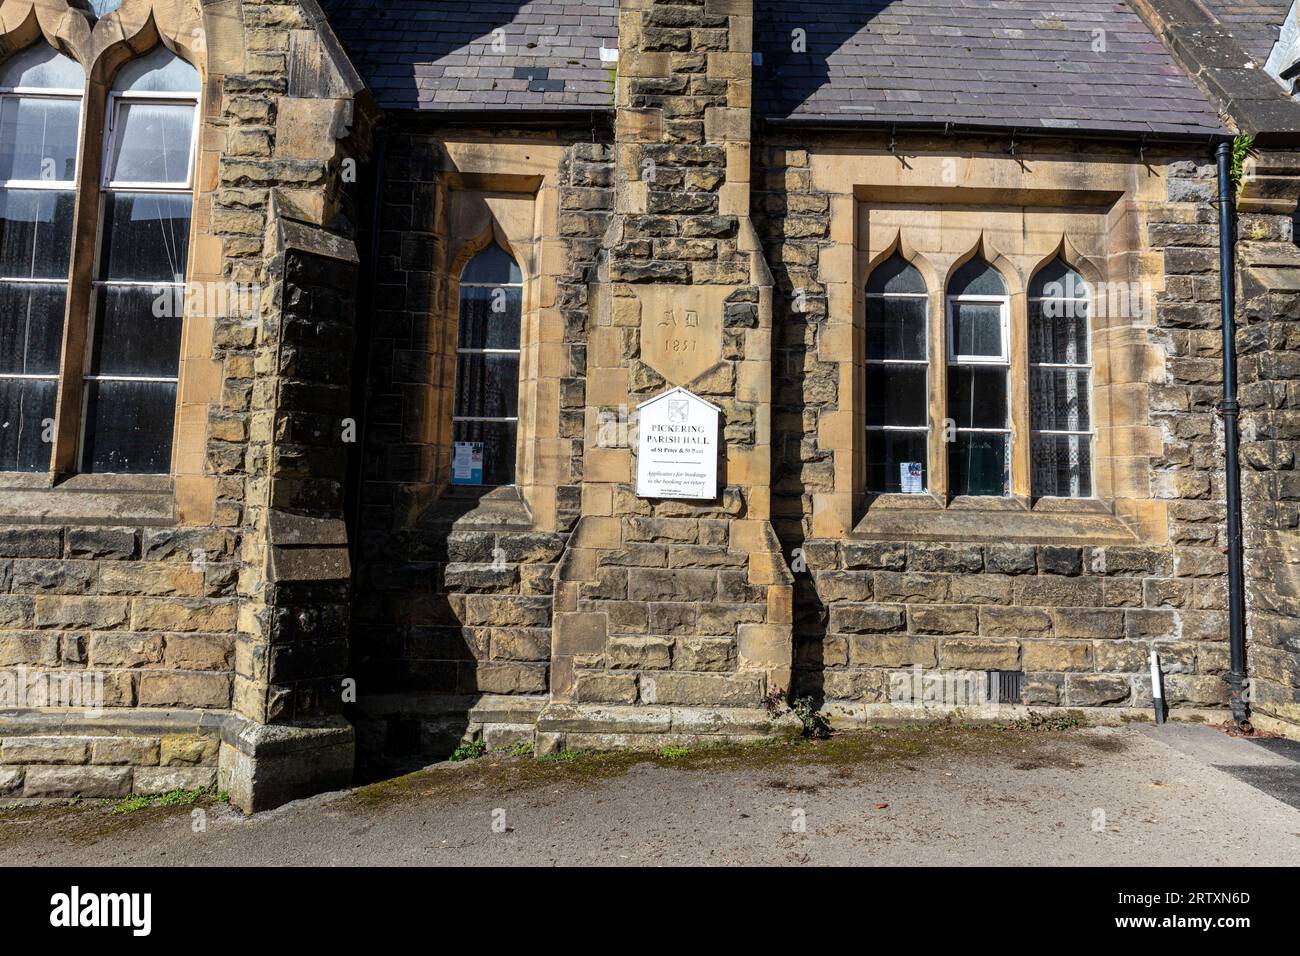 Pickering Parish Hall of St Peter & St Paul, Pickering, North Yorkshire, Yorkshire, UK, England, Pickering Parish Hall, Parish Hall, sign, building Stock Photo